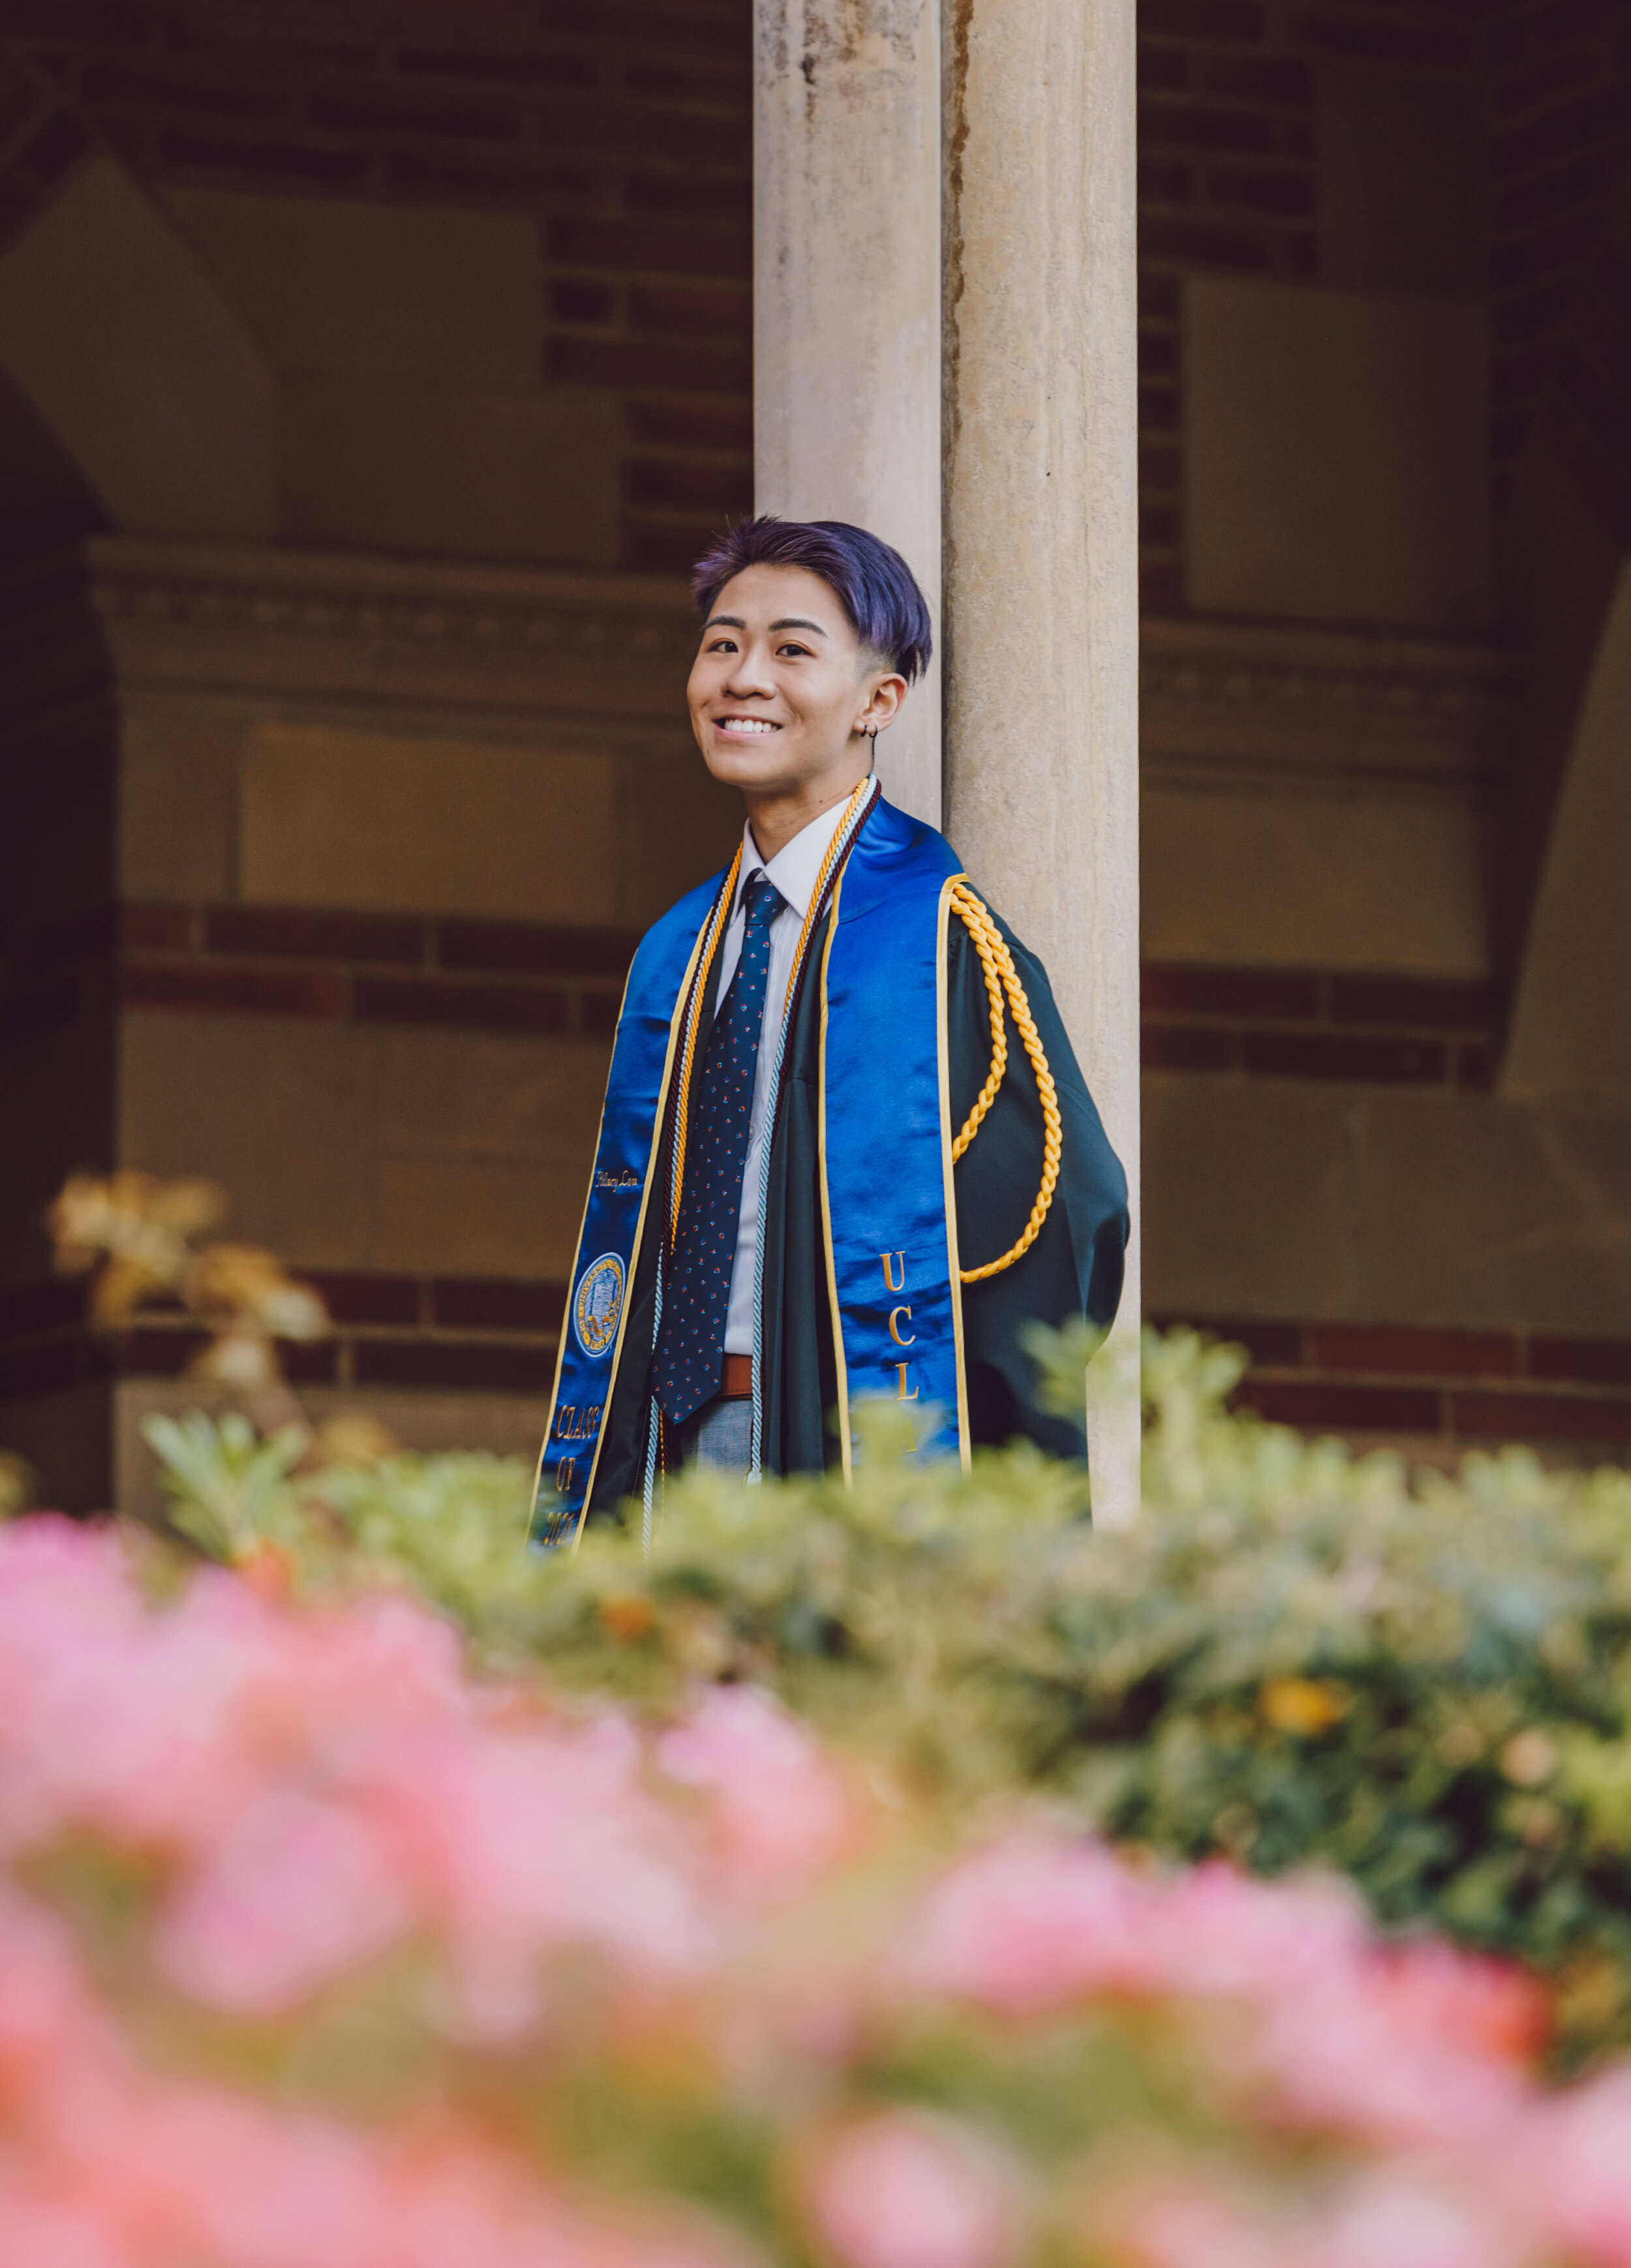 Los-Angeles-Graduation-Photographer-UCLA-16.jpg